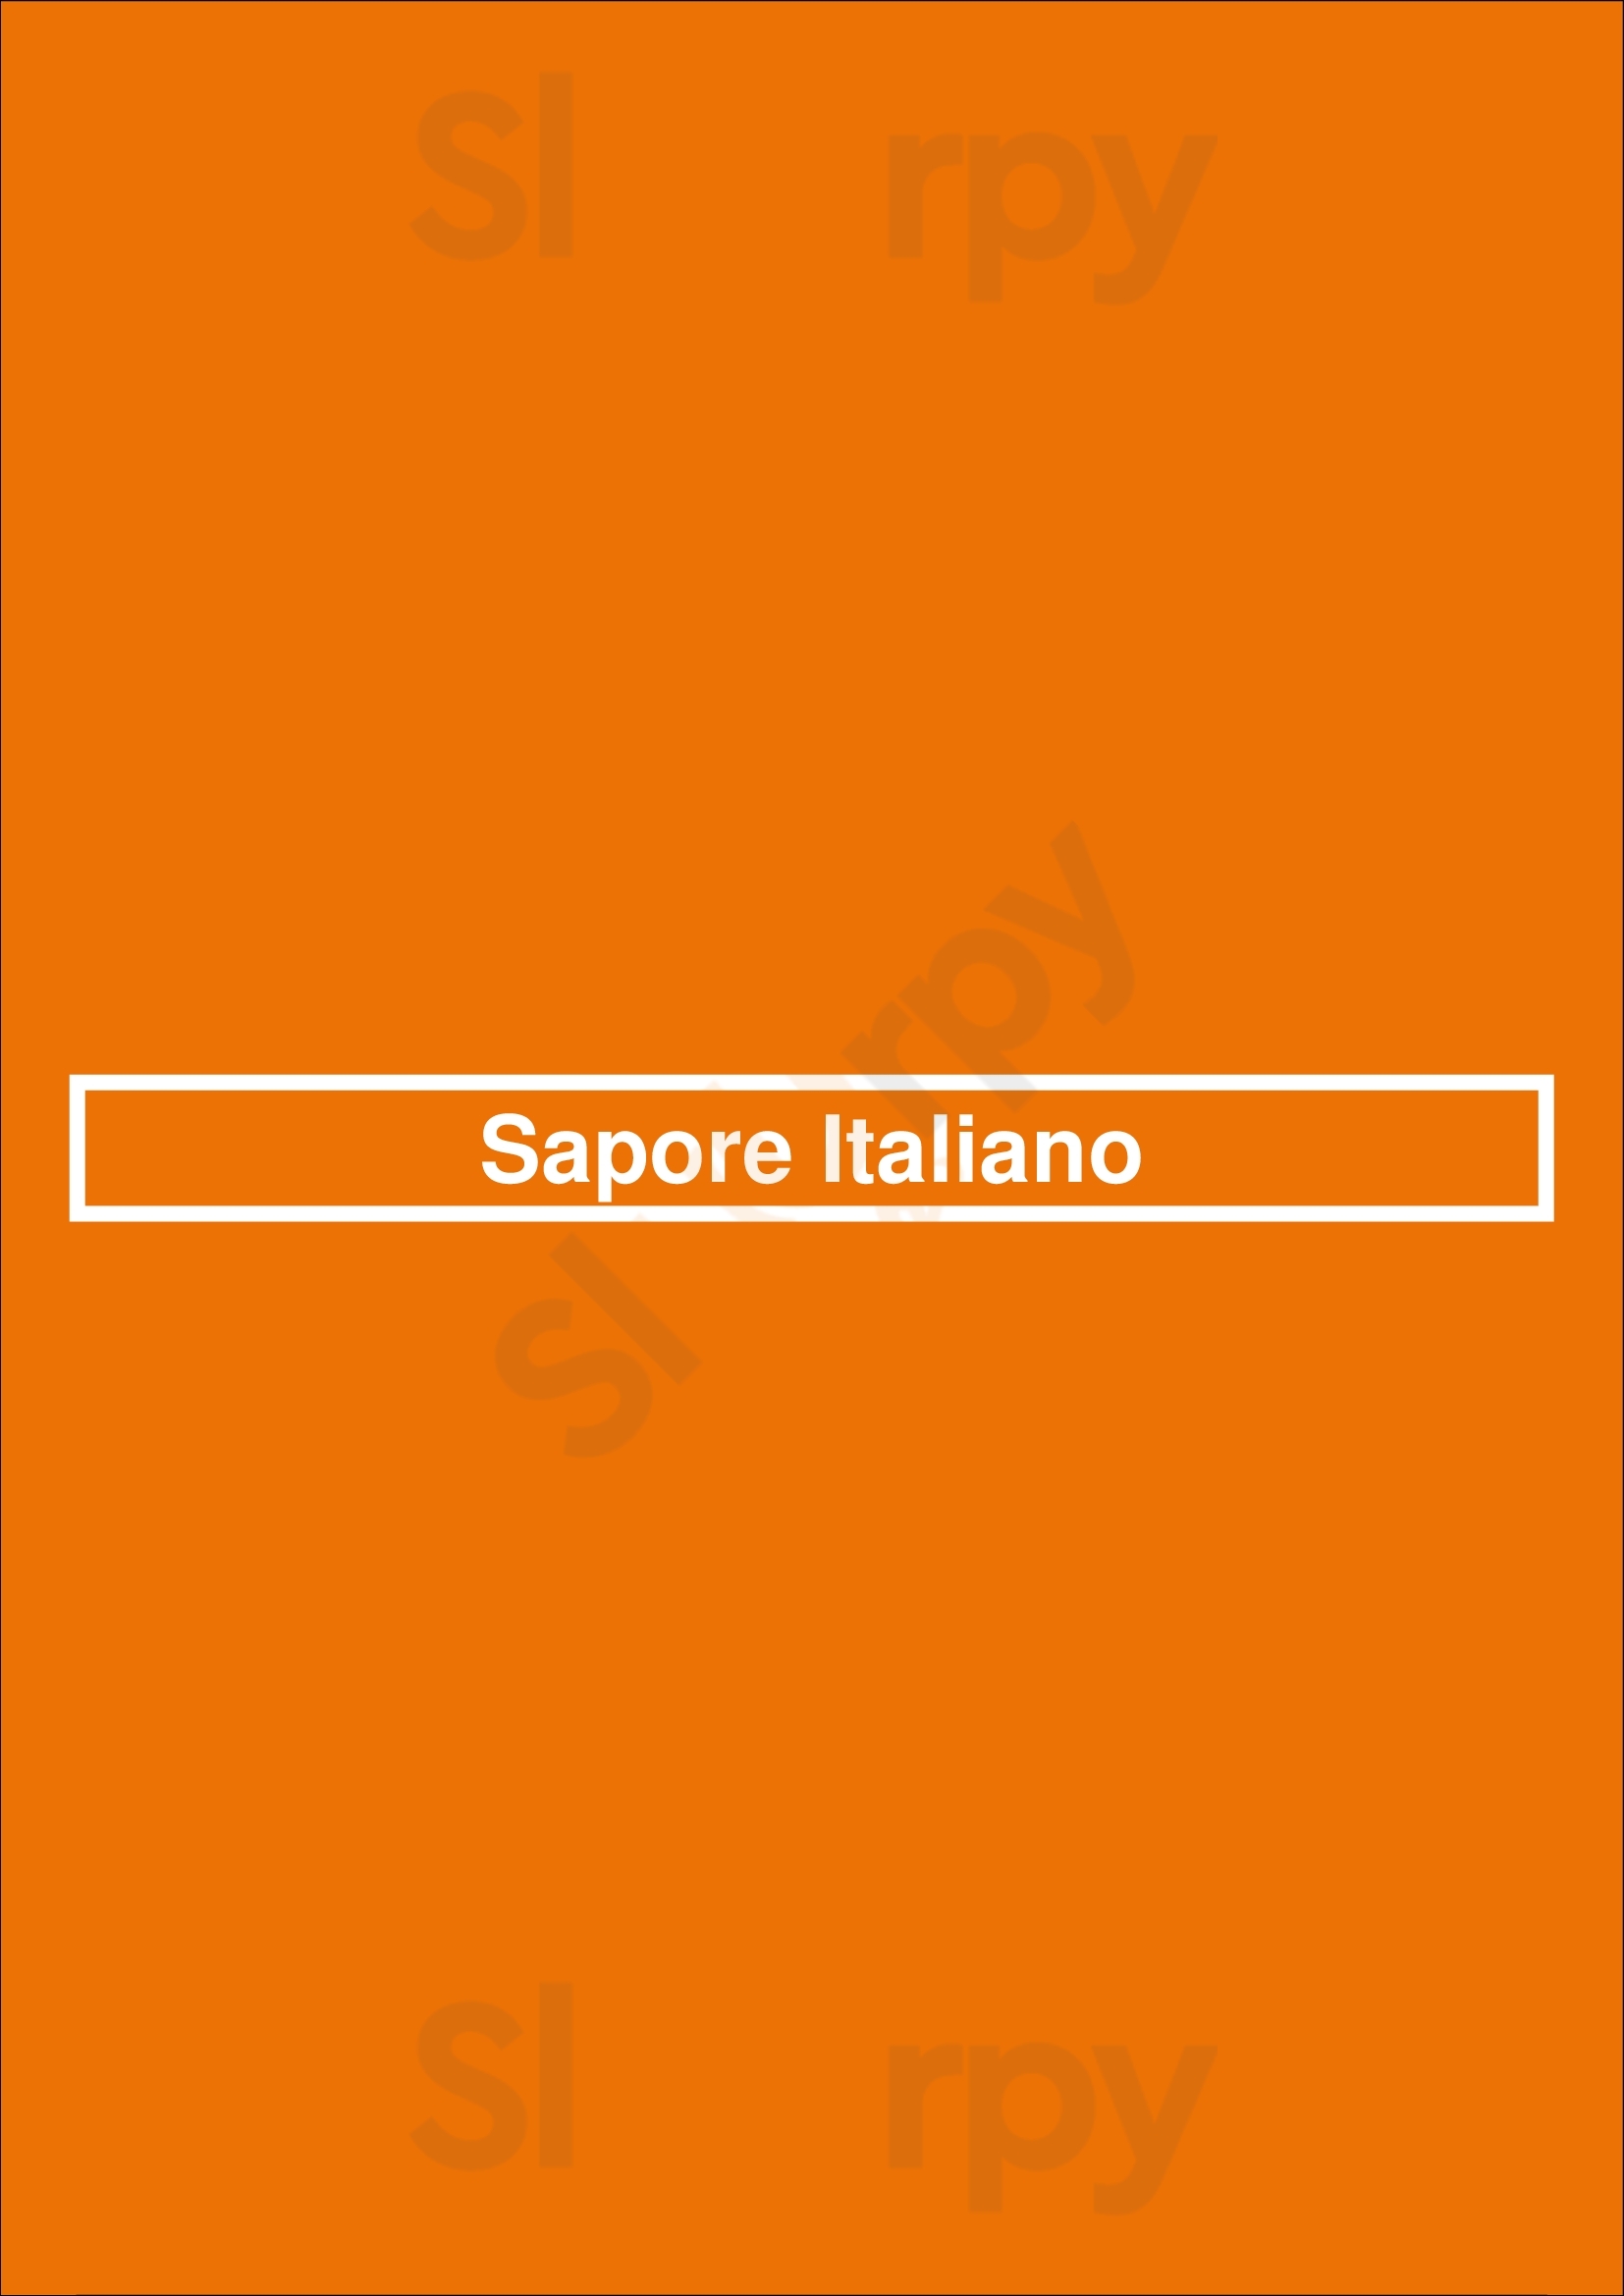 Sapore Italiano London Menu - 1